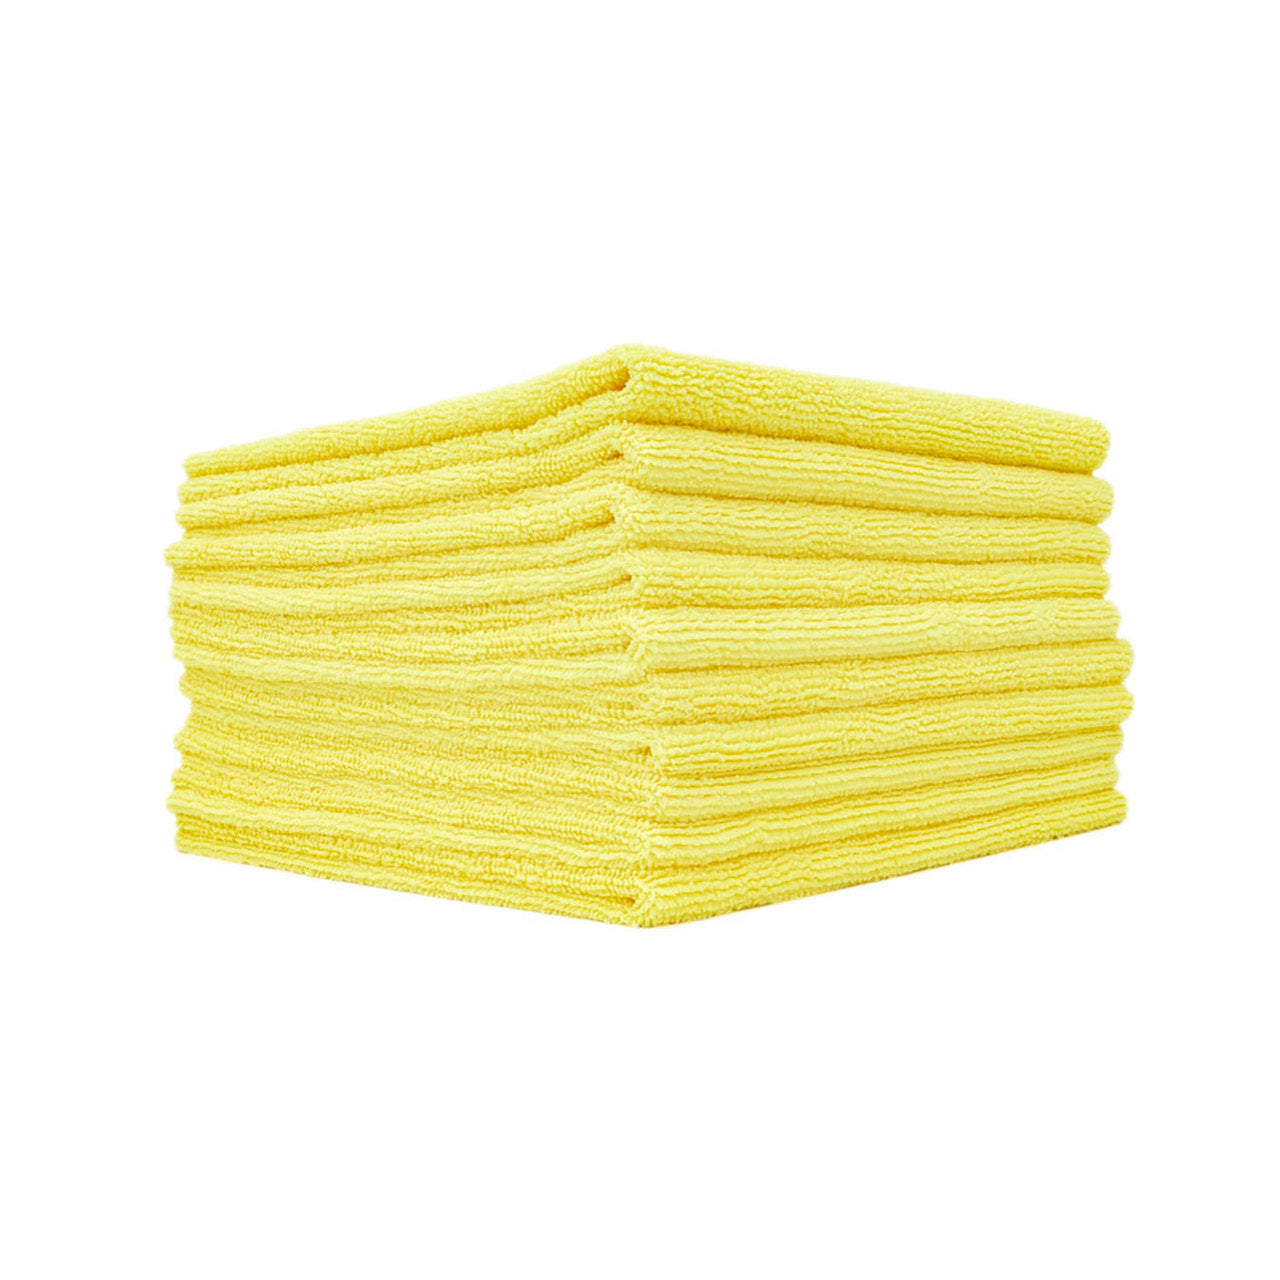 The Rag Company Edgeless 300 All-Purpose 16 x 16 70/30 Microfiber Terry Towel - Yellow